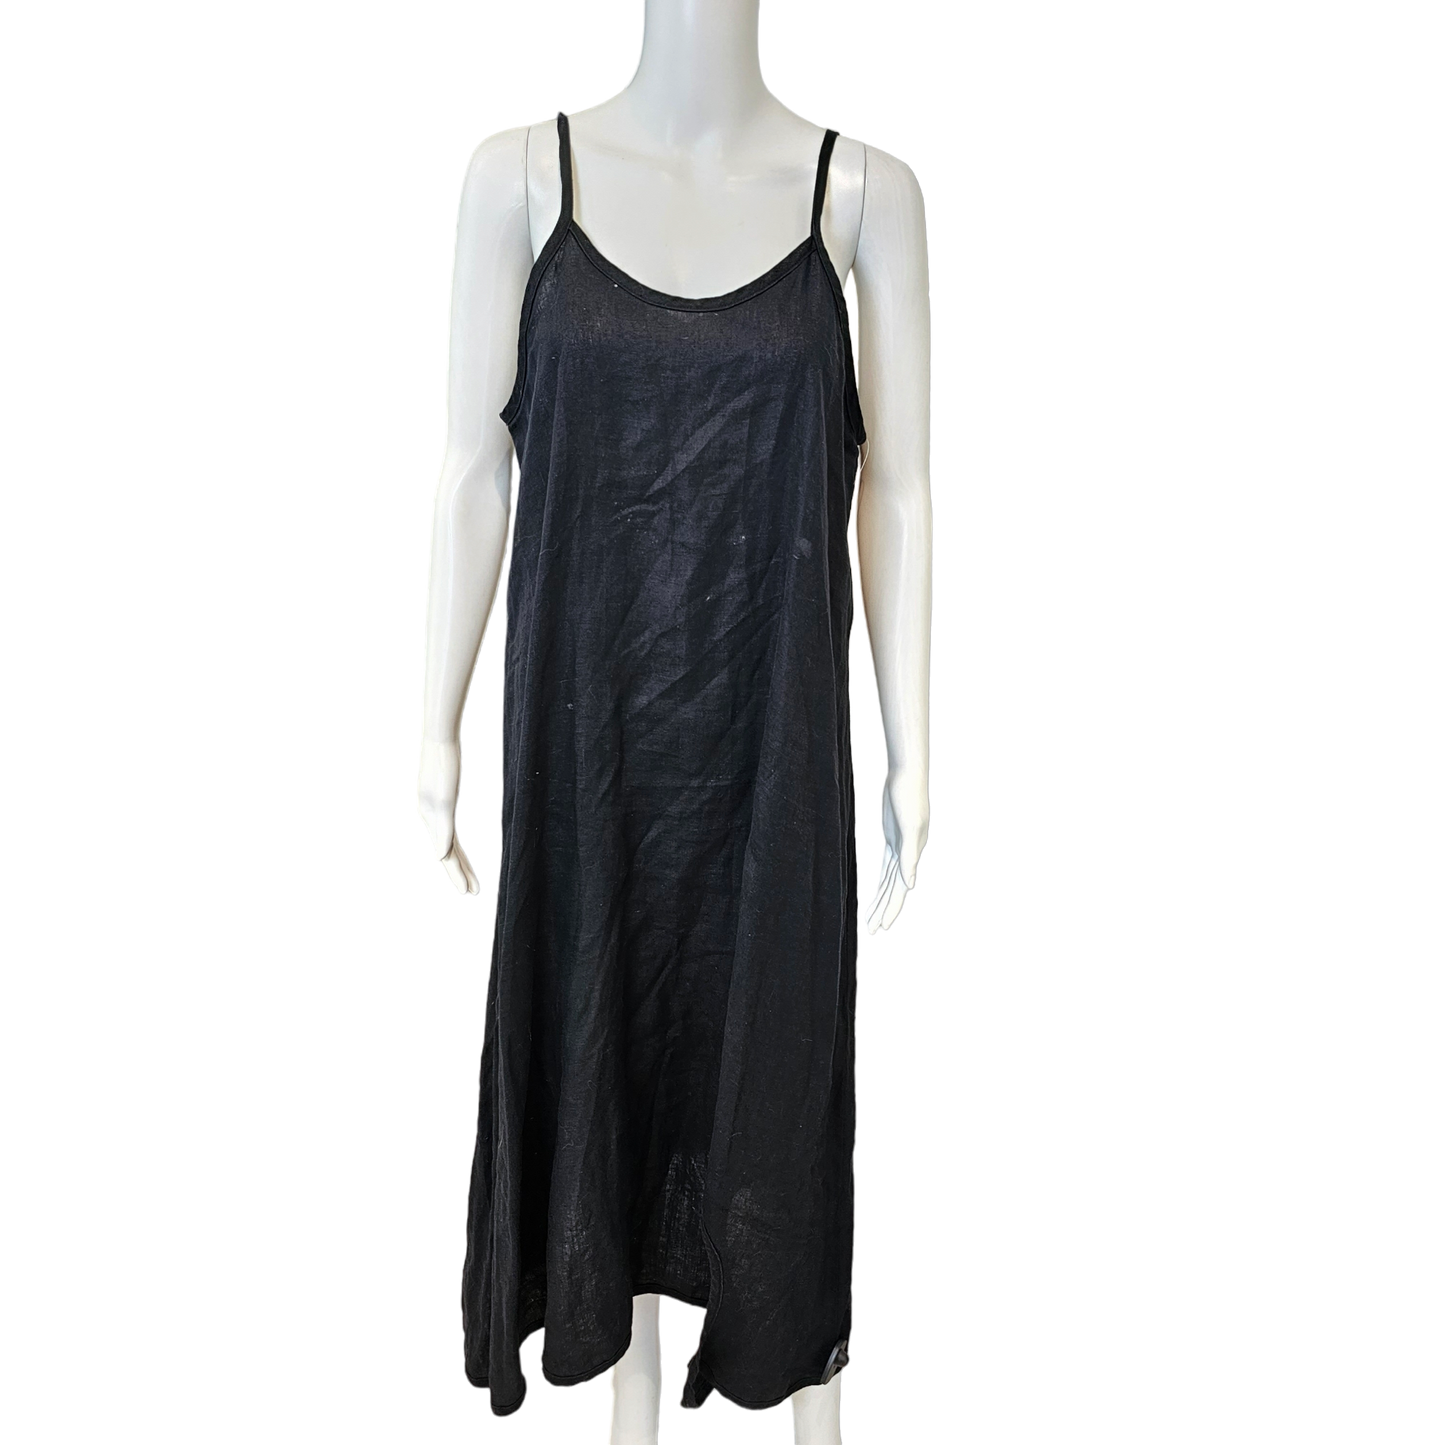 Dress Designer By CYNTHIA ASHBY Size: S